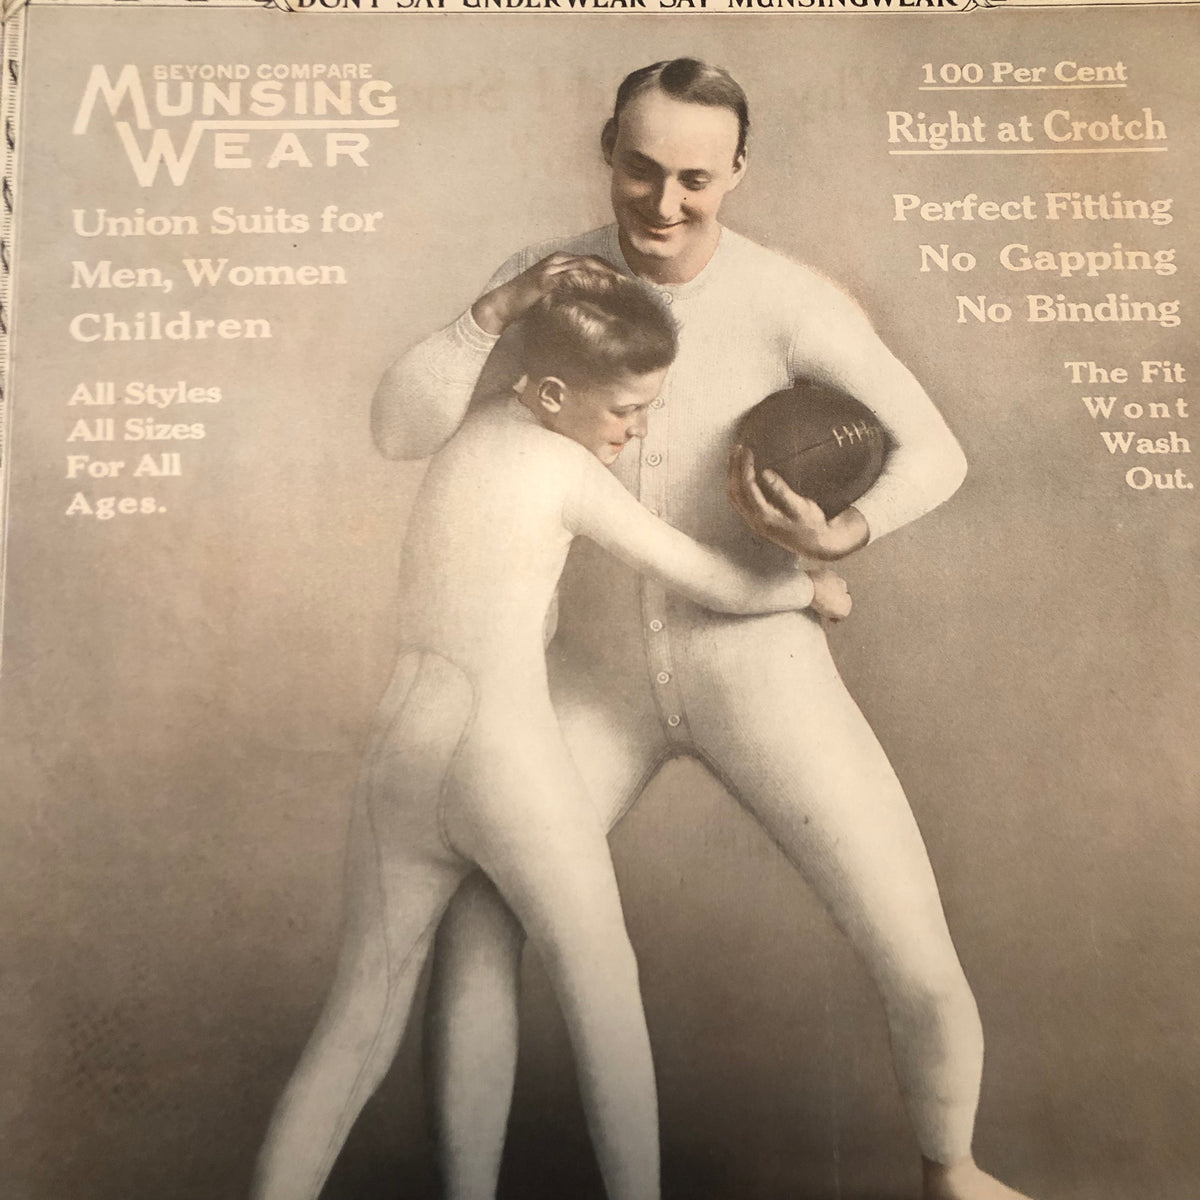 1919 Ad Munsingwear Union Suits Underwear Children Dad - ORIGINAL SEP4